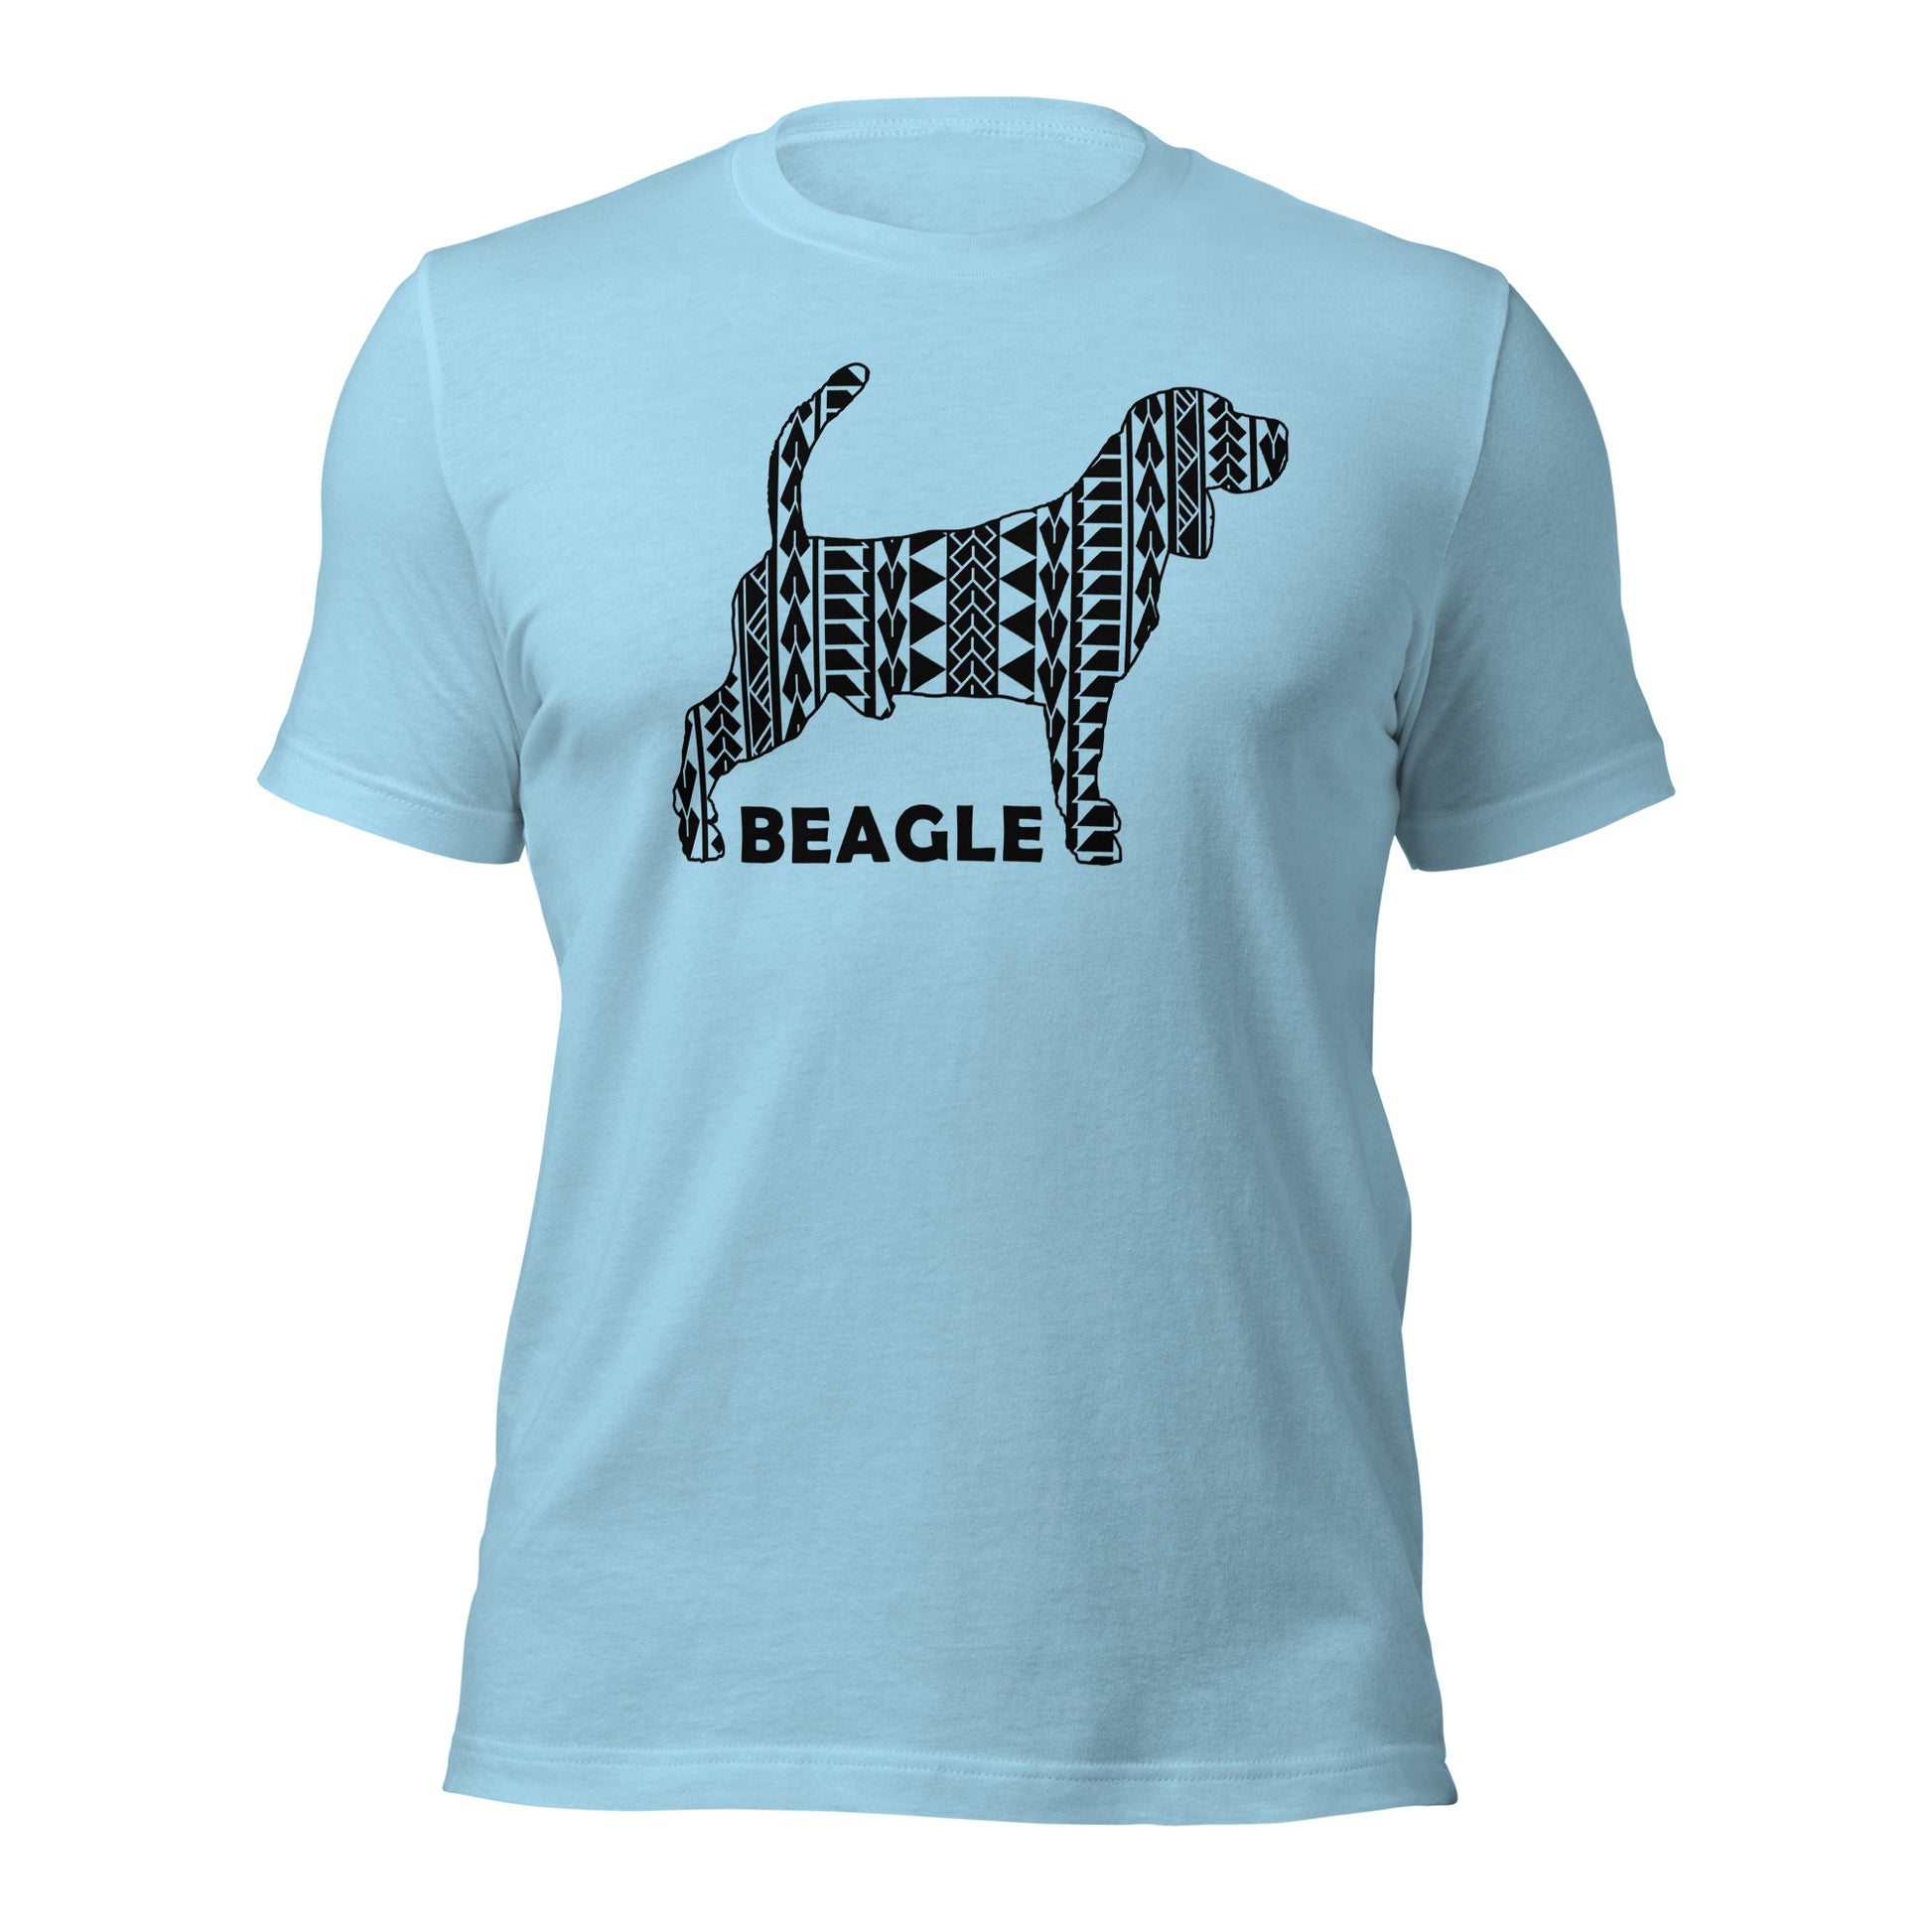 Beagle Polynesian t-shirt blue by Dog Artistry.